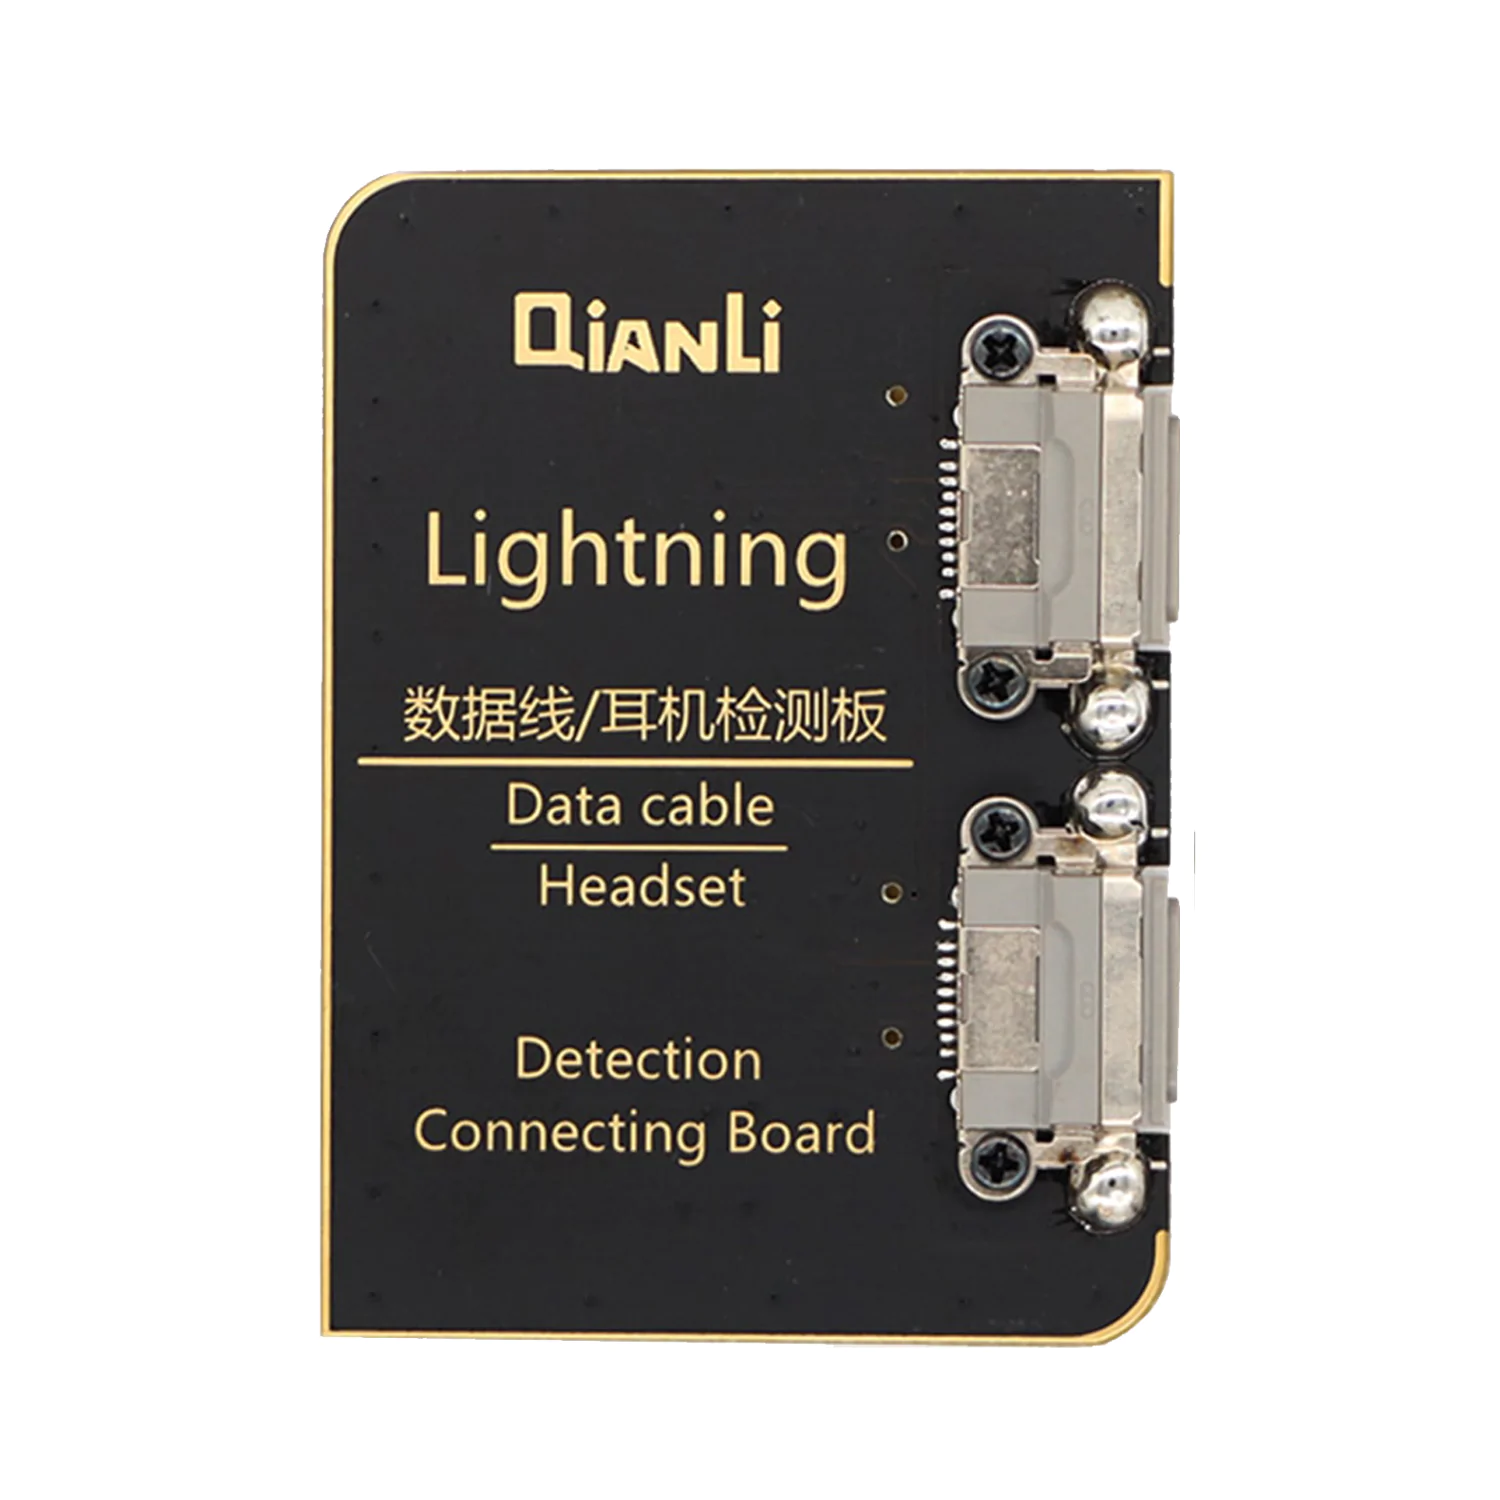 Carte iCopy Plus QianLi V2 Détection Lightning (Data Cable + Headset)